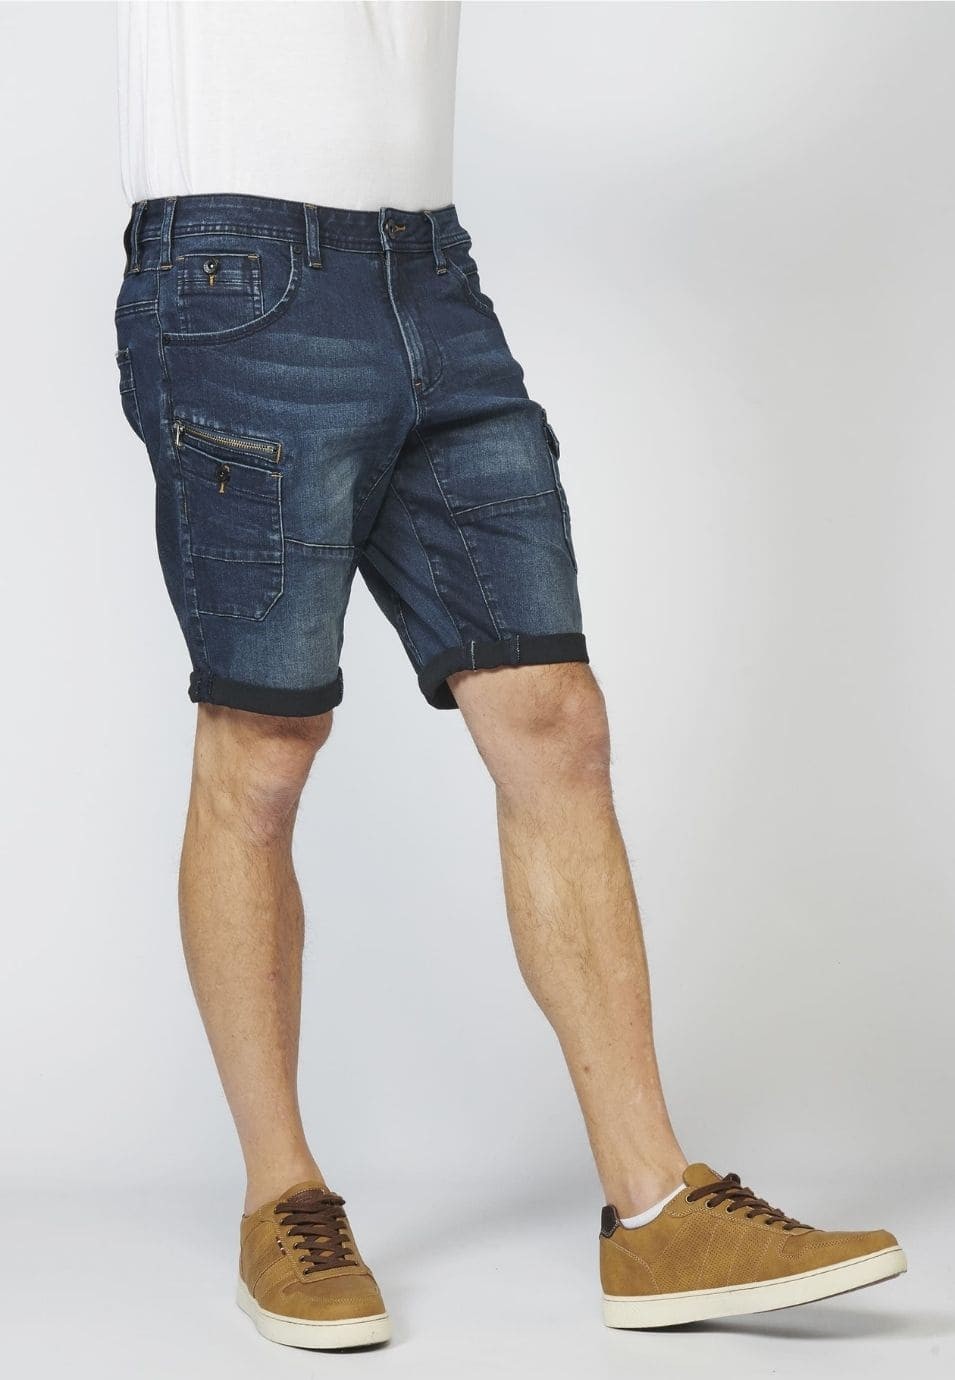 Pantalon corto denim cortes regular fit